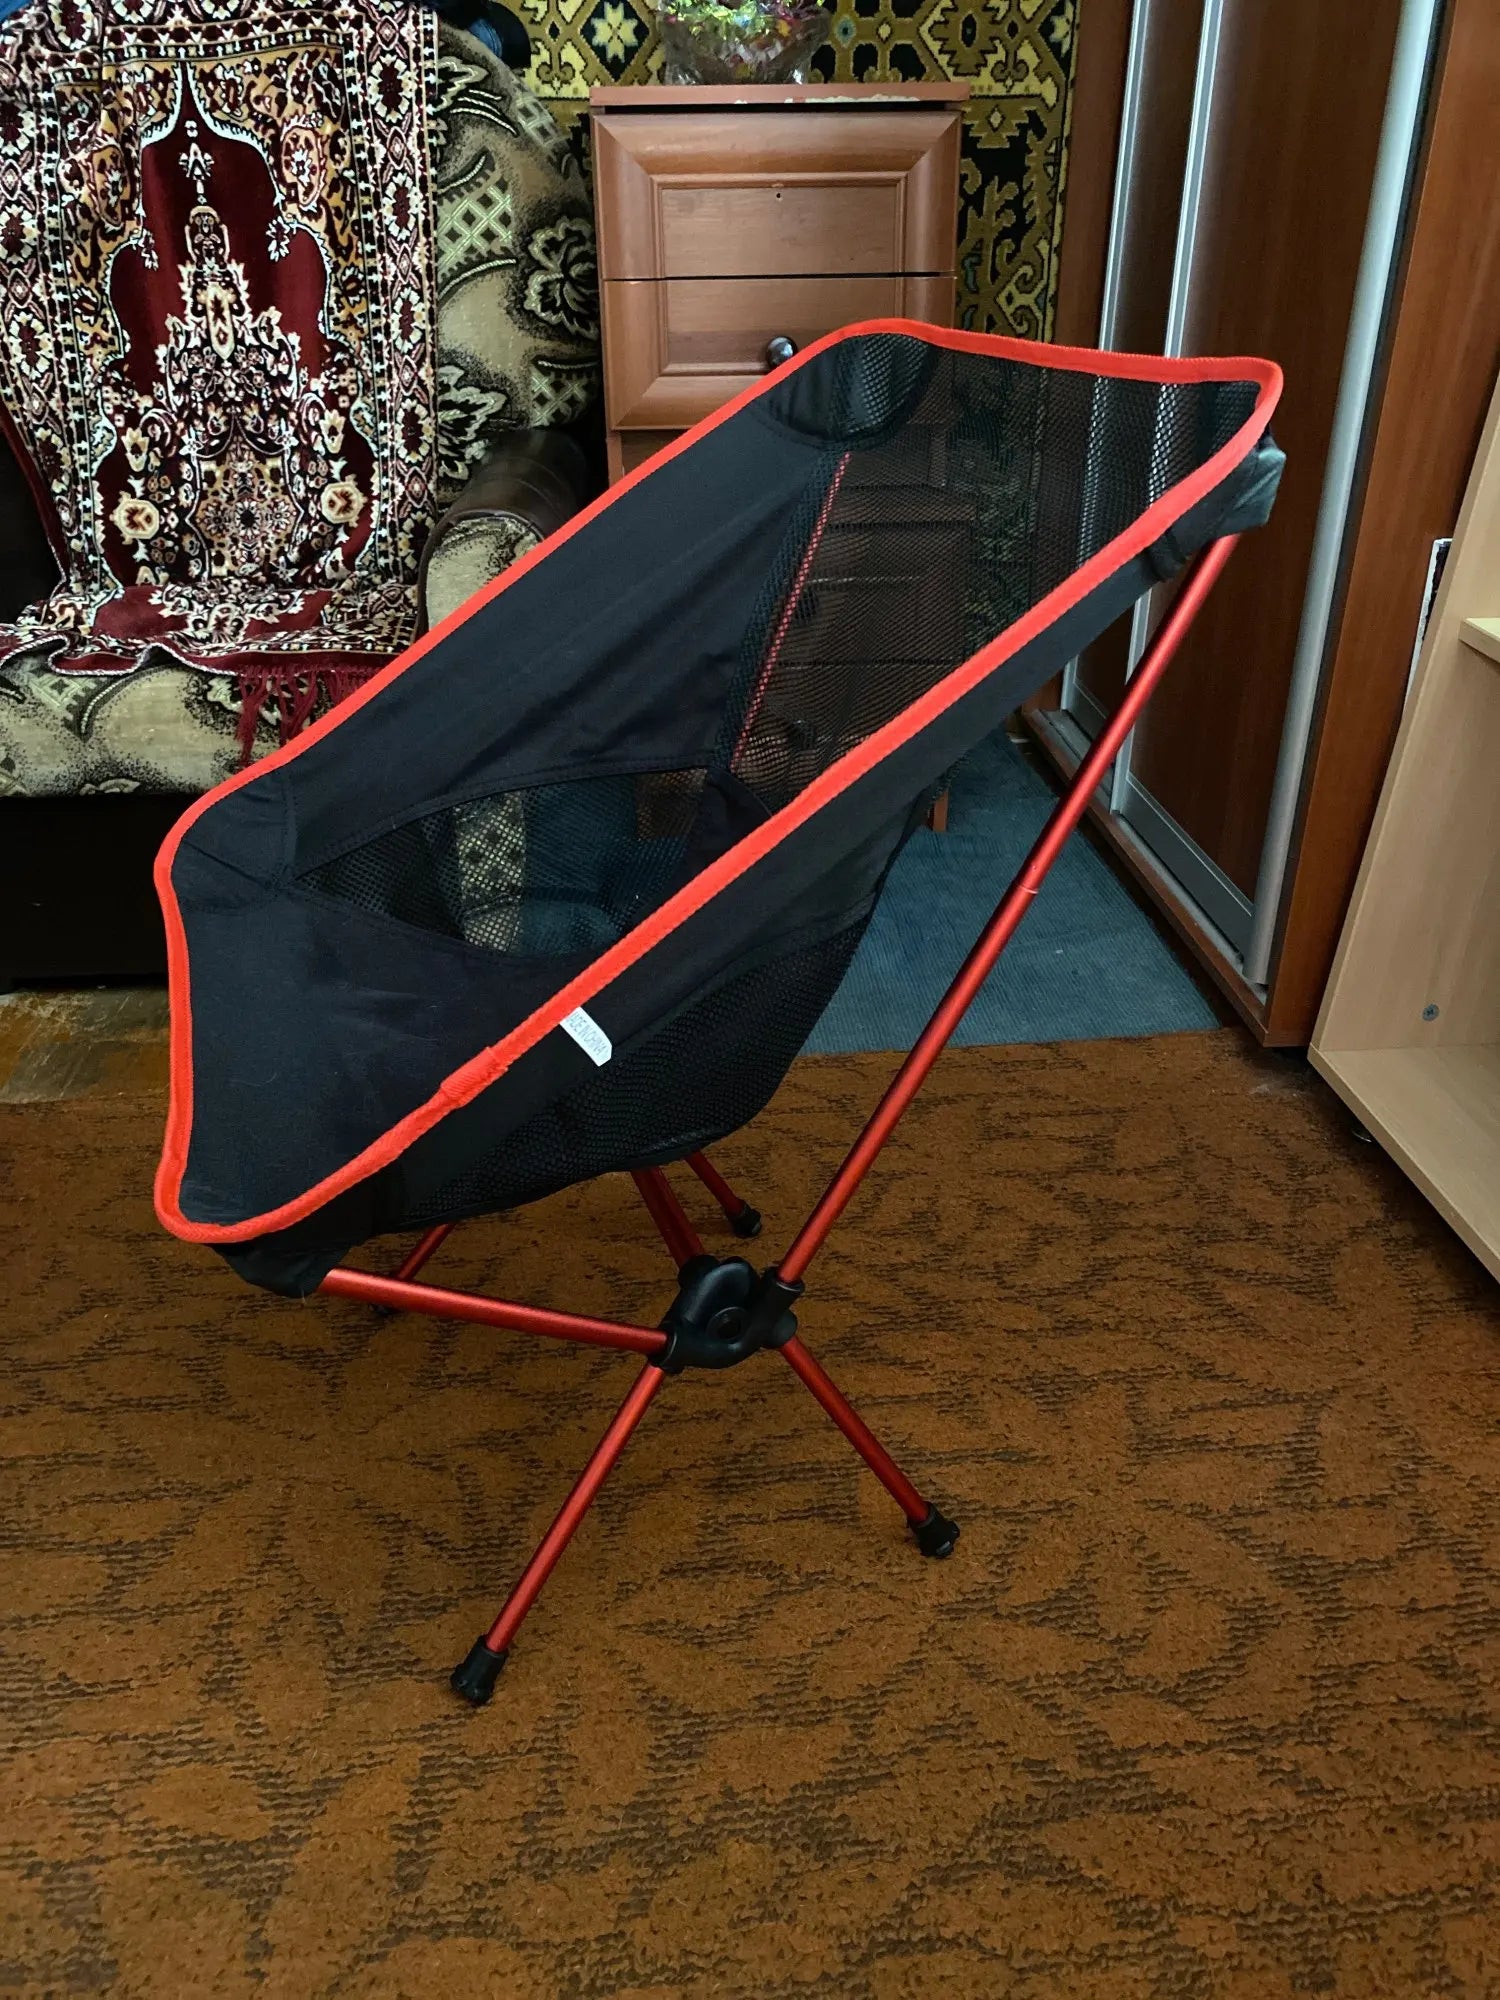 Camping Folding Chair Portable Lightweight, Hiking Beach Fishing Tools Chair